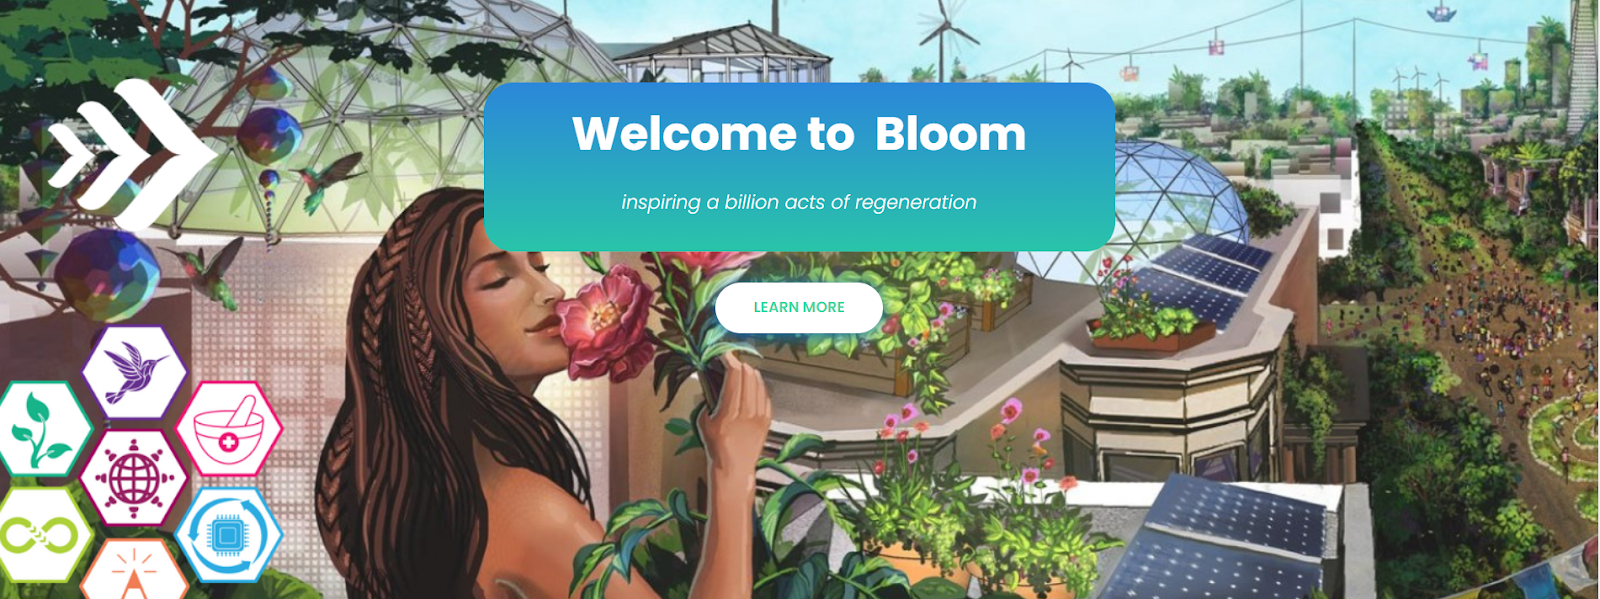 Bloom Network's Landing Page Header (https://bloomnetwork.org/)